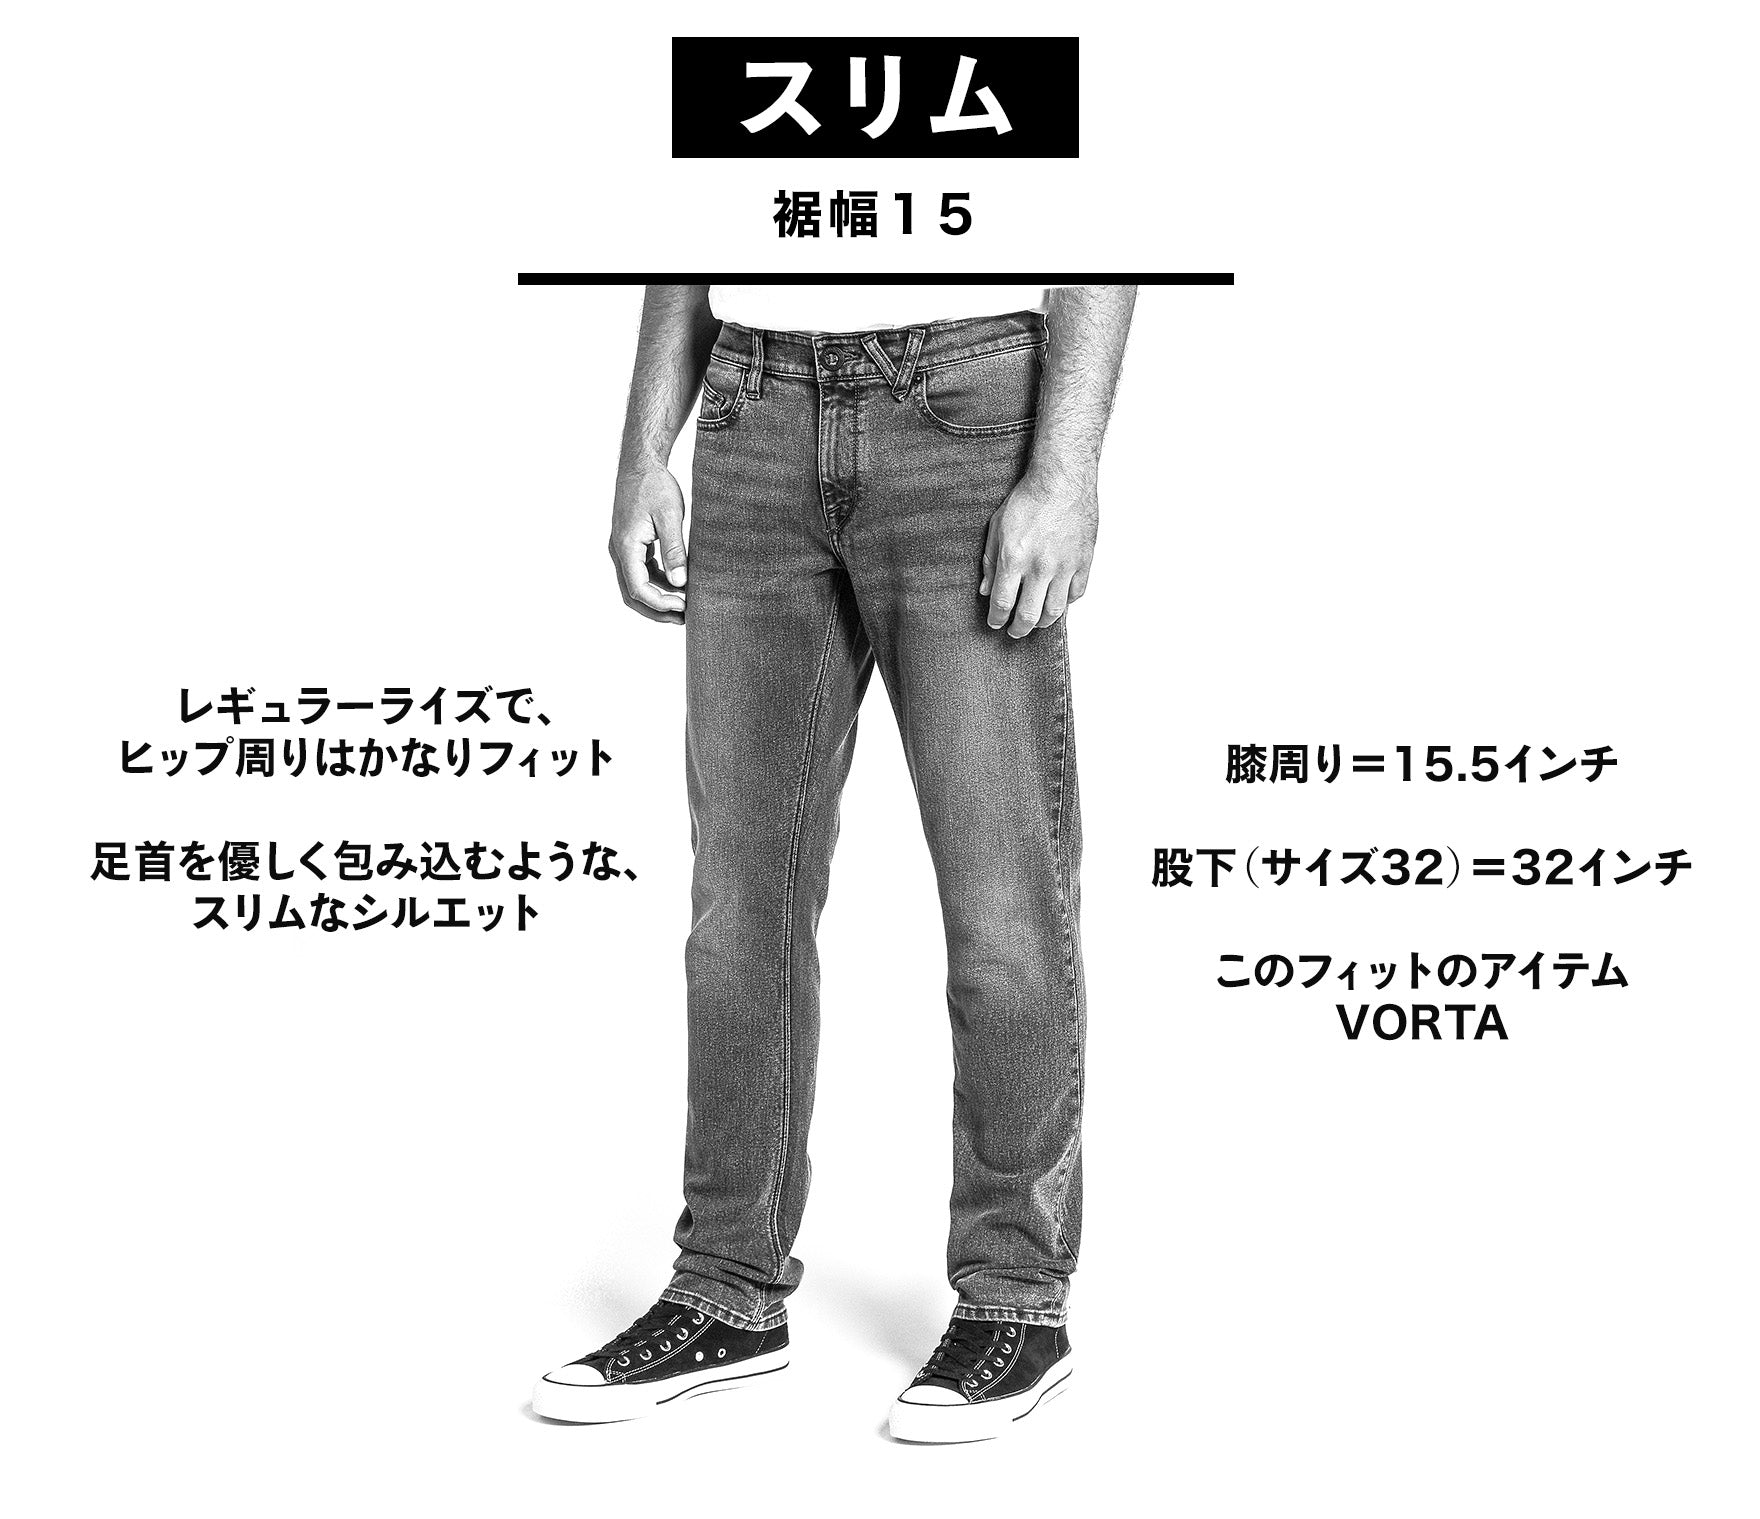 Vorta Slim Fit Jeans - Black on Black – Volcom Japan